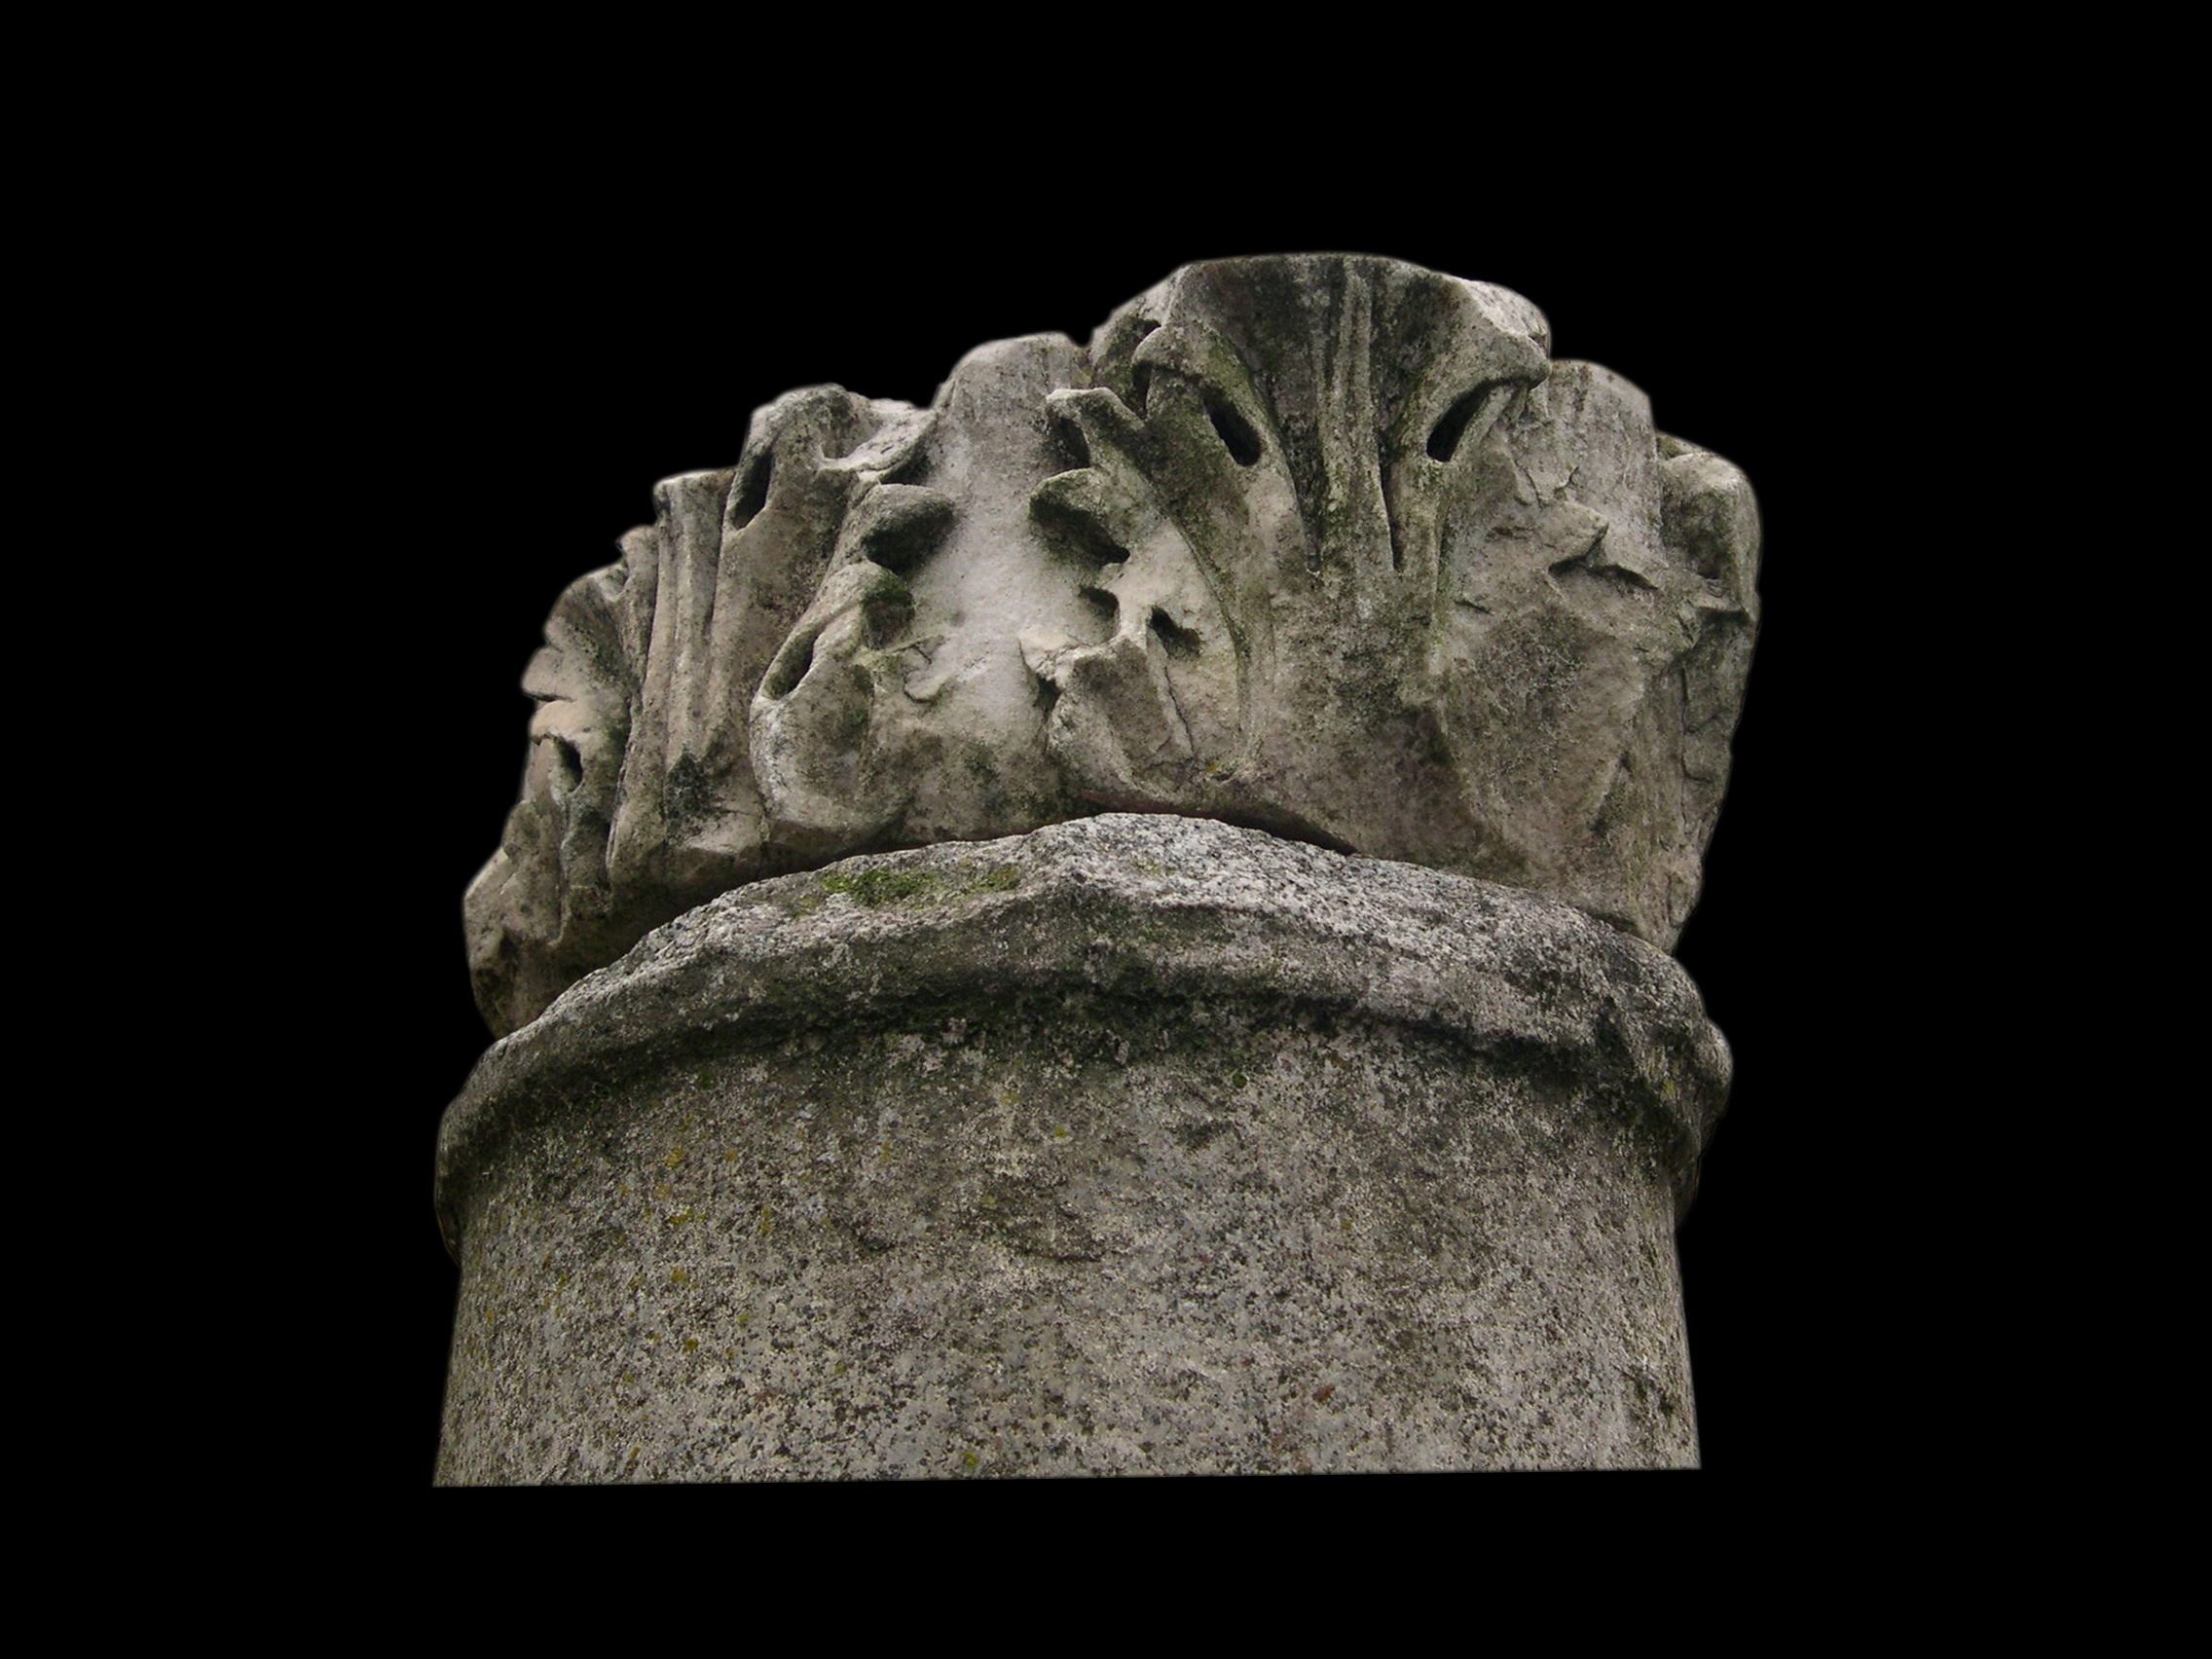 Opera di Fragment of Corinthian column capital